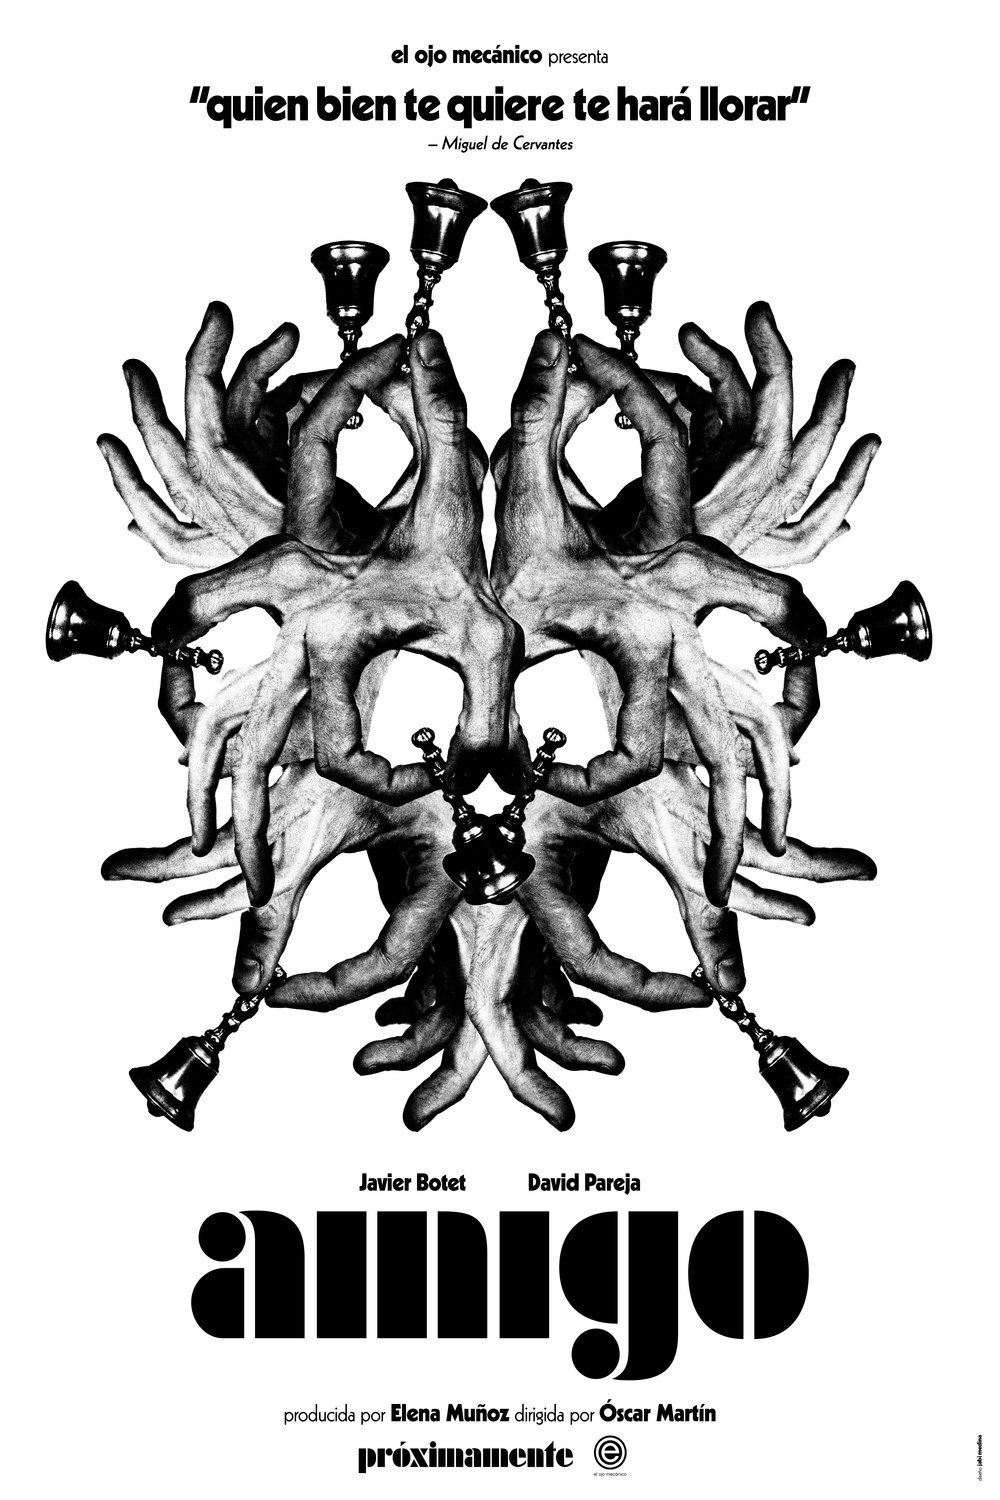 Spanish poster of the movie Amigo